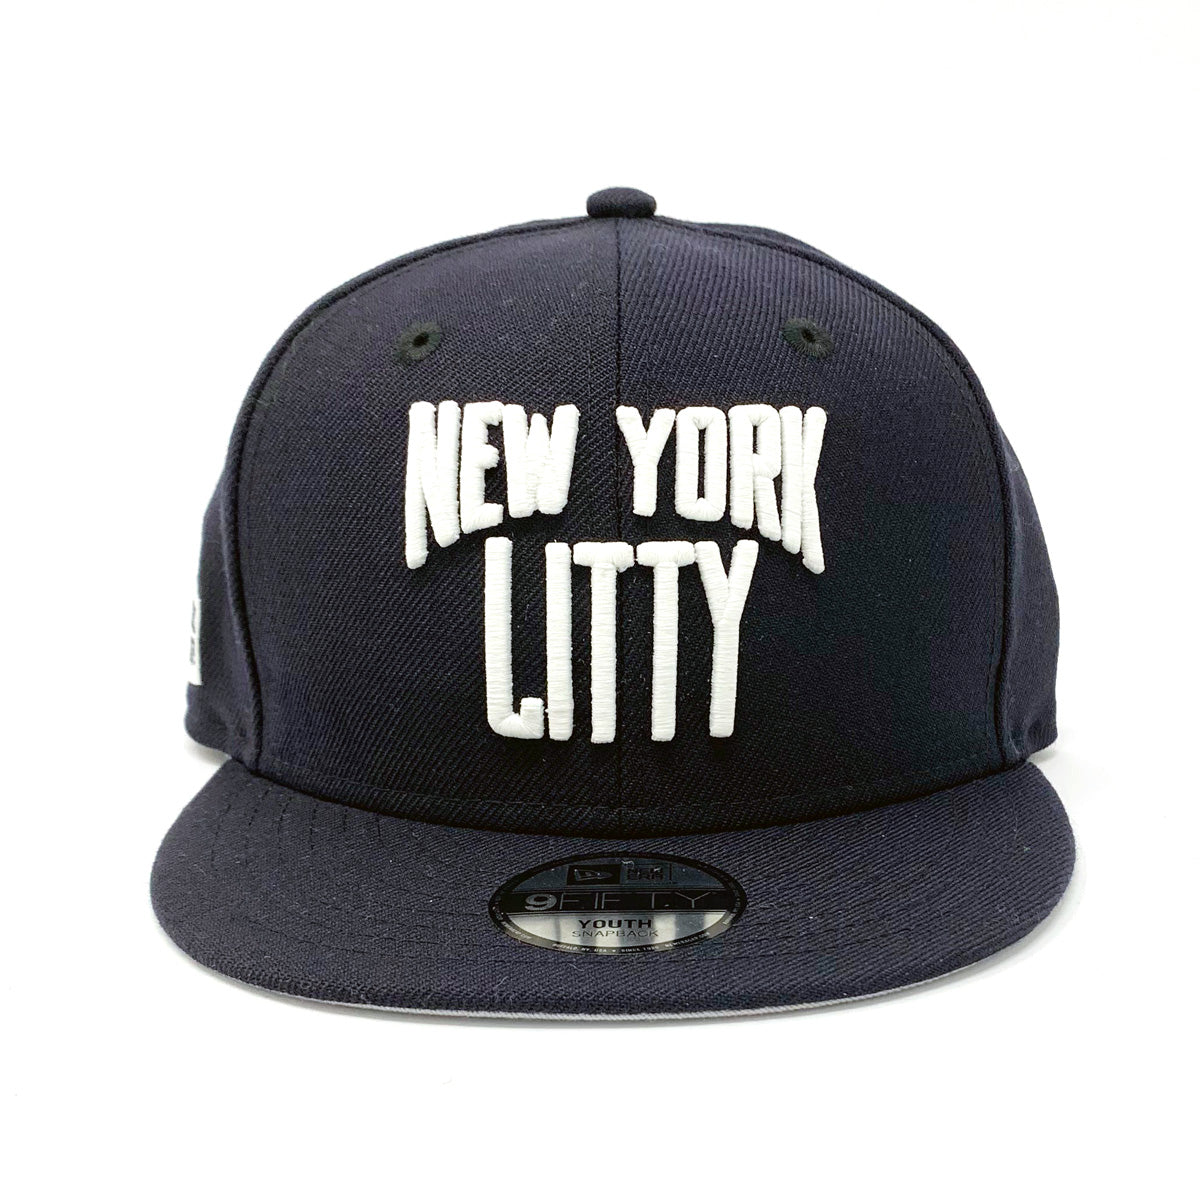 New York Litty Hat (Glow In The Dark)